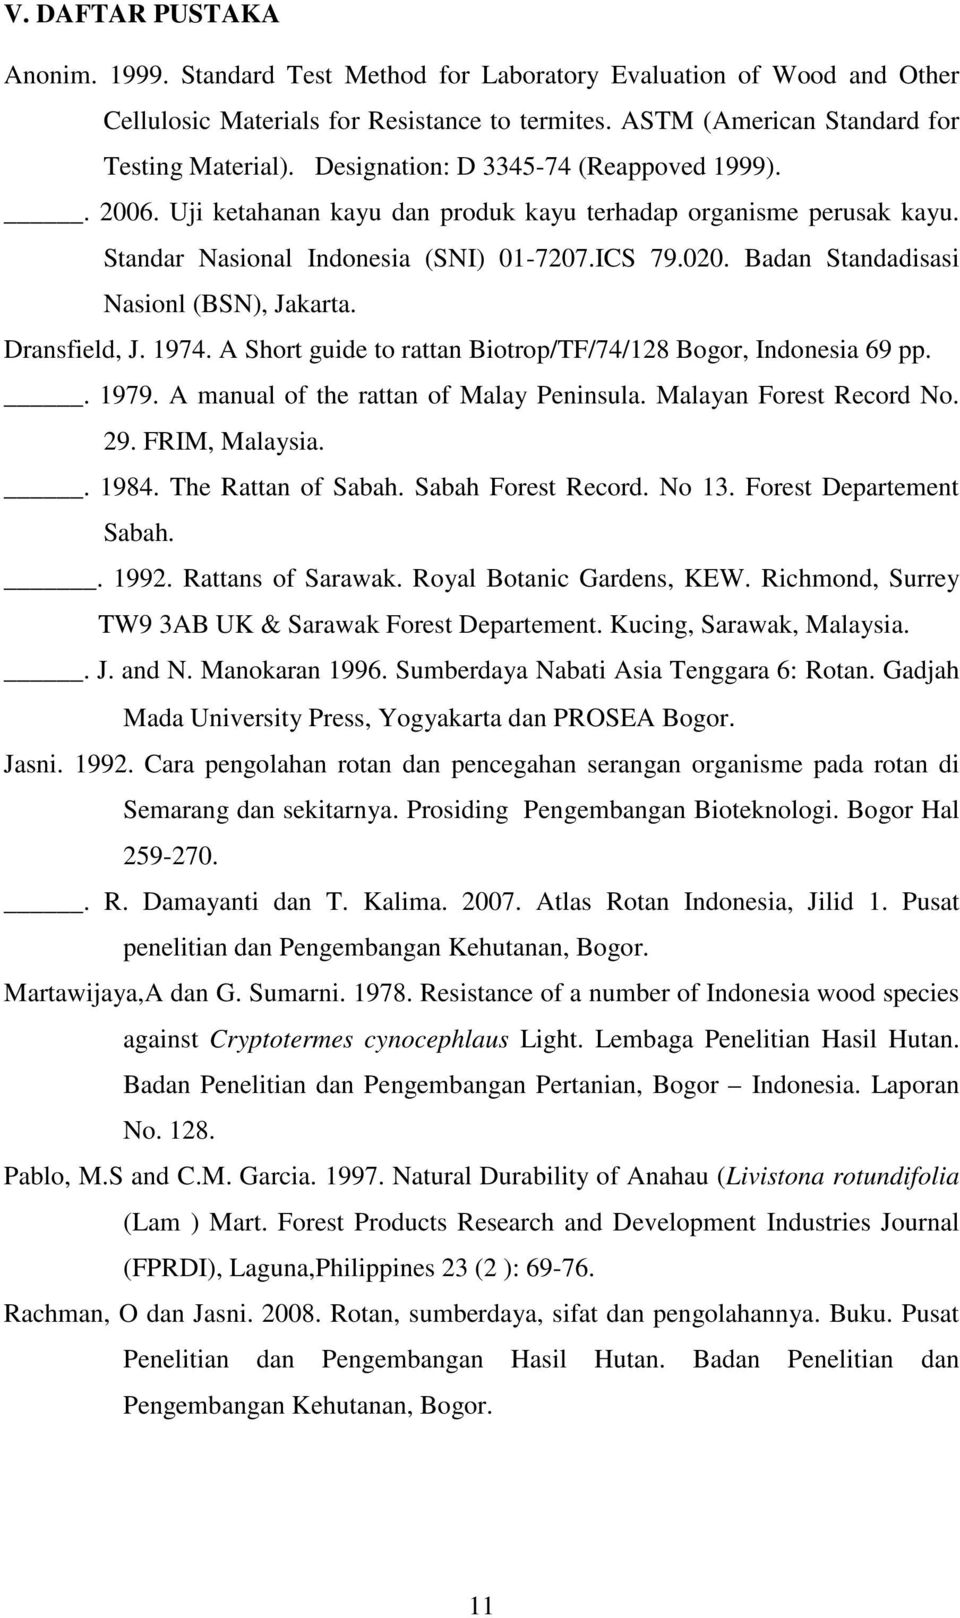 Badan Standadisasi Nasionl (BSN), Jakarta. Dransfield, J. 1974. A Short guide to rattan Biotrop/TF/74/128 Bogor, Indonesia 69 pp.. 1979. A manual of the rattan of Malay Peninsula.